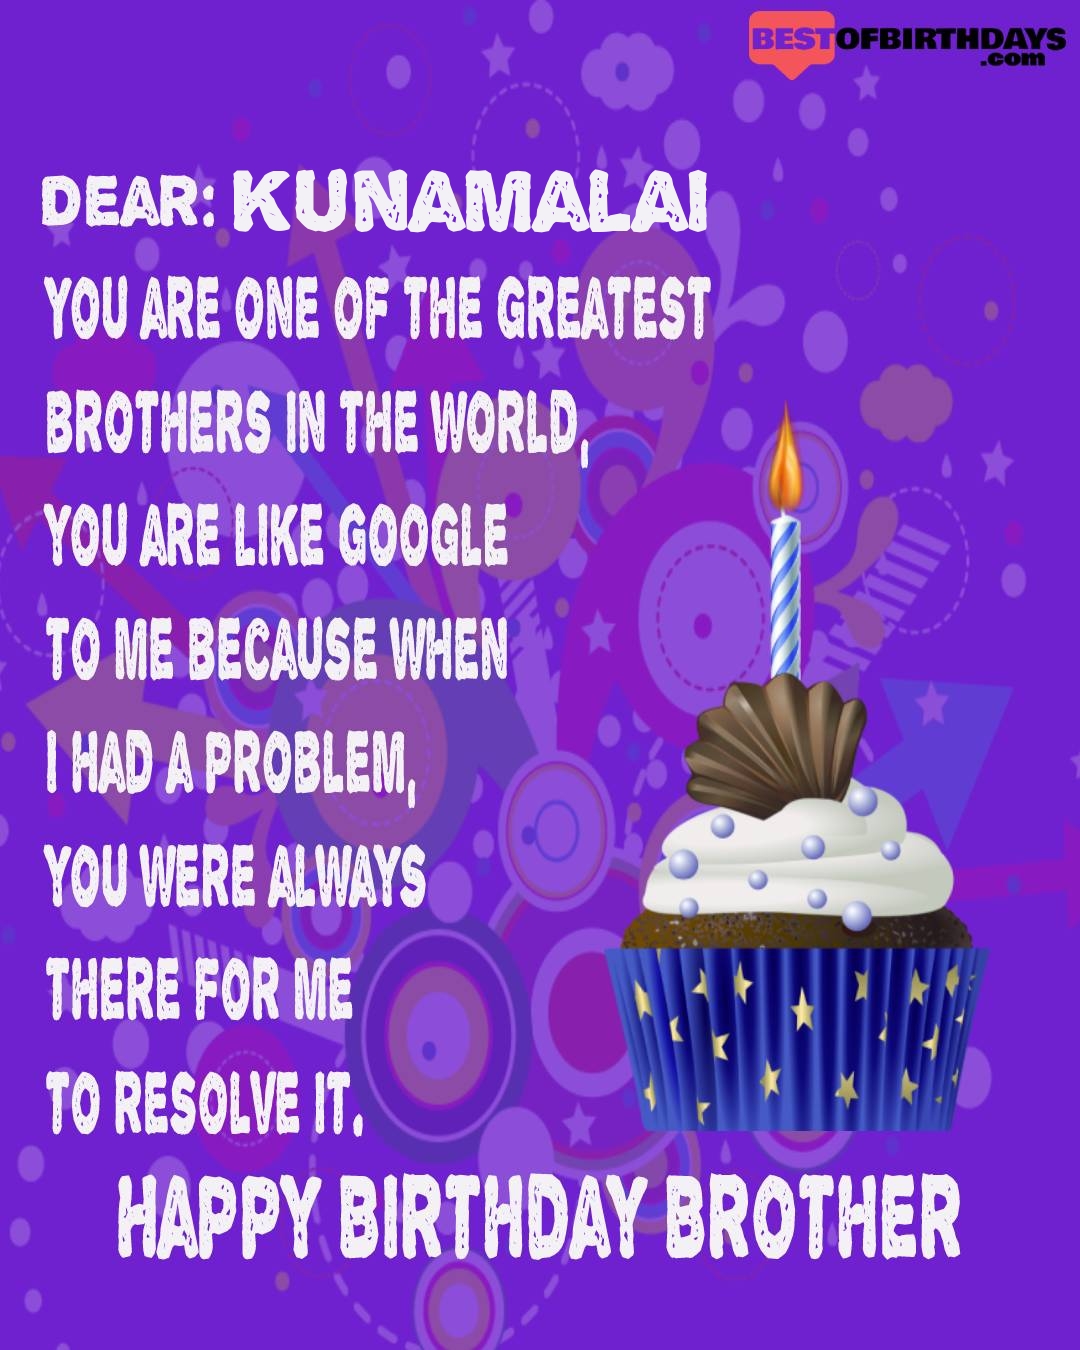 Happy birthday kunamalai bhai brother bro